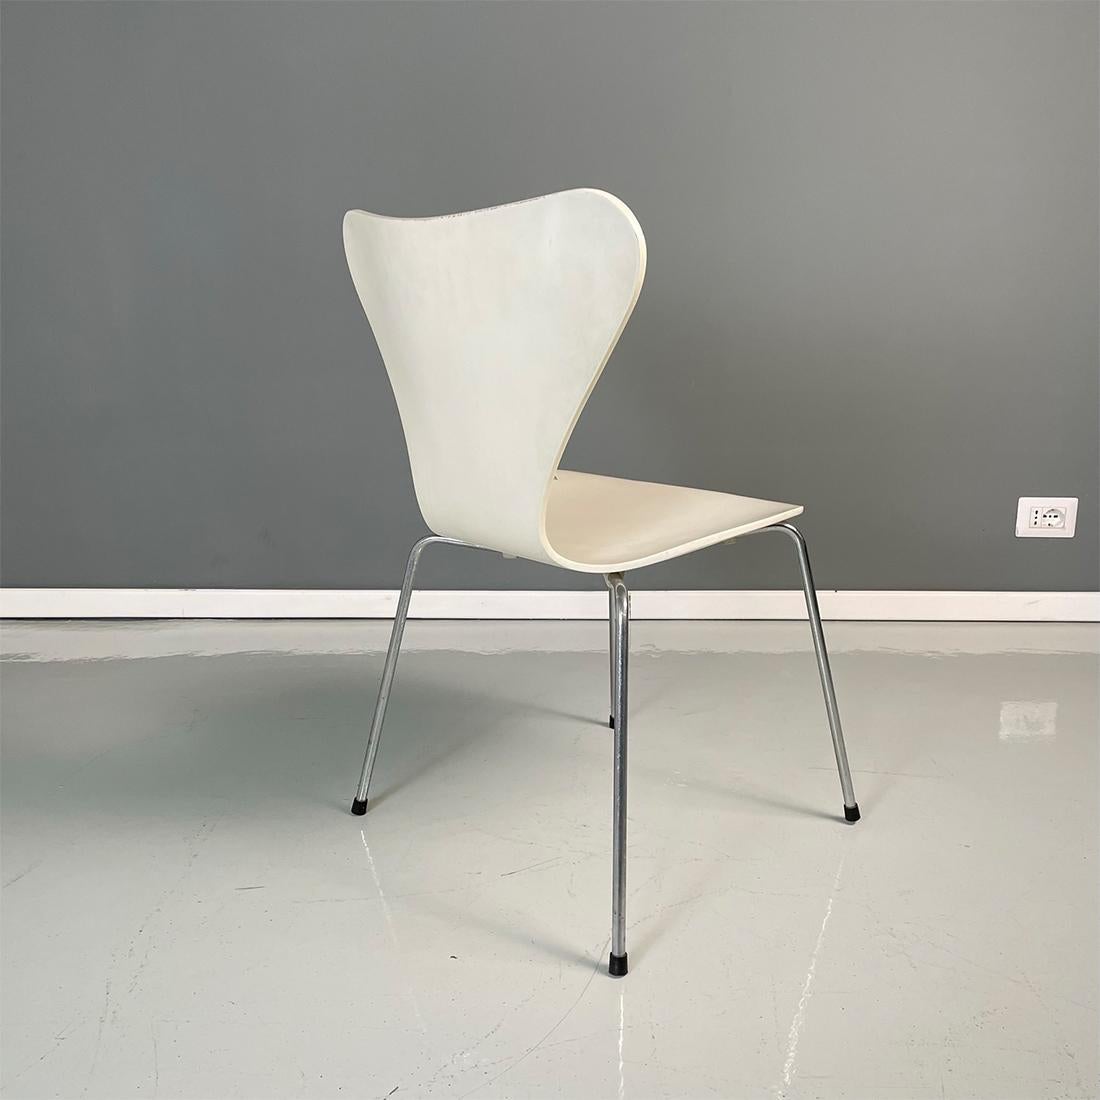 Danish Modern White Chairs of Series 7 by Arne Jacobsen for Fritz Hansen, 1970s For Sale 7